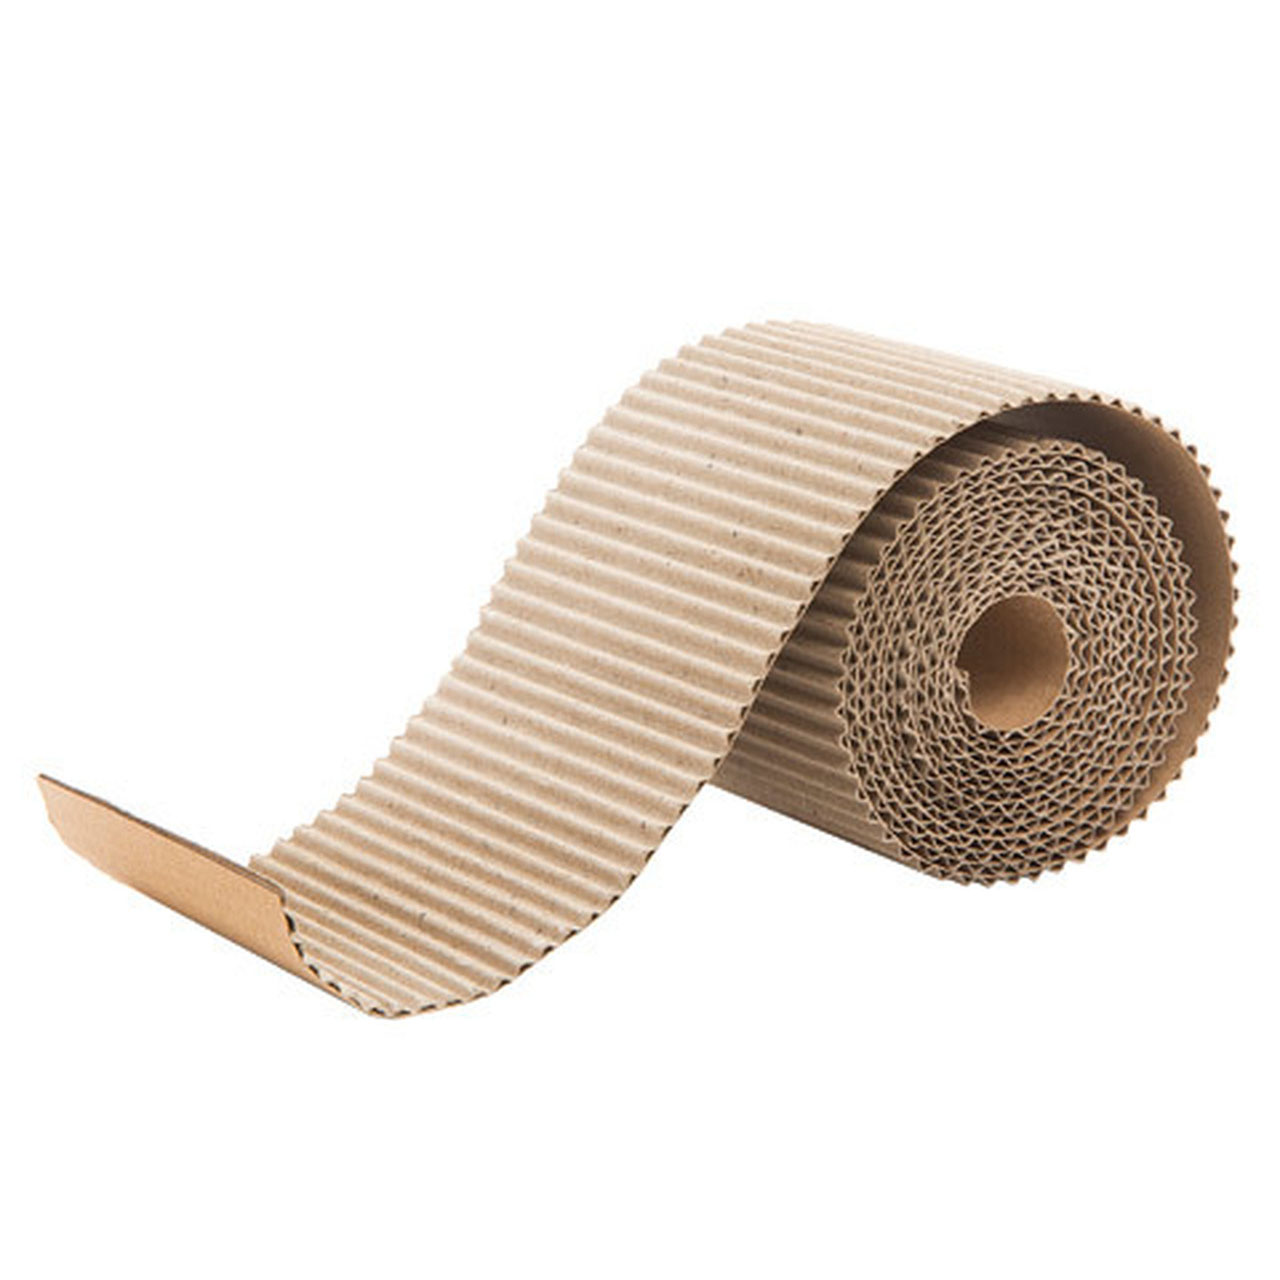 Dubai-Corrugated-Cardboard-Supplier